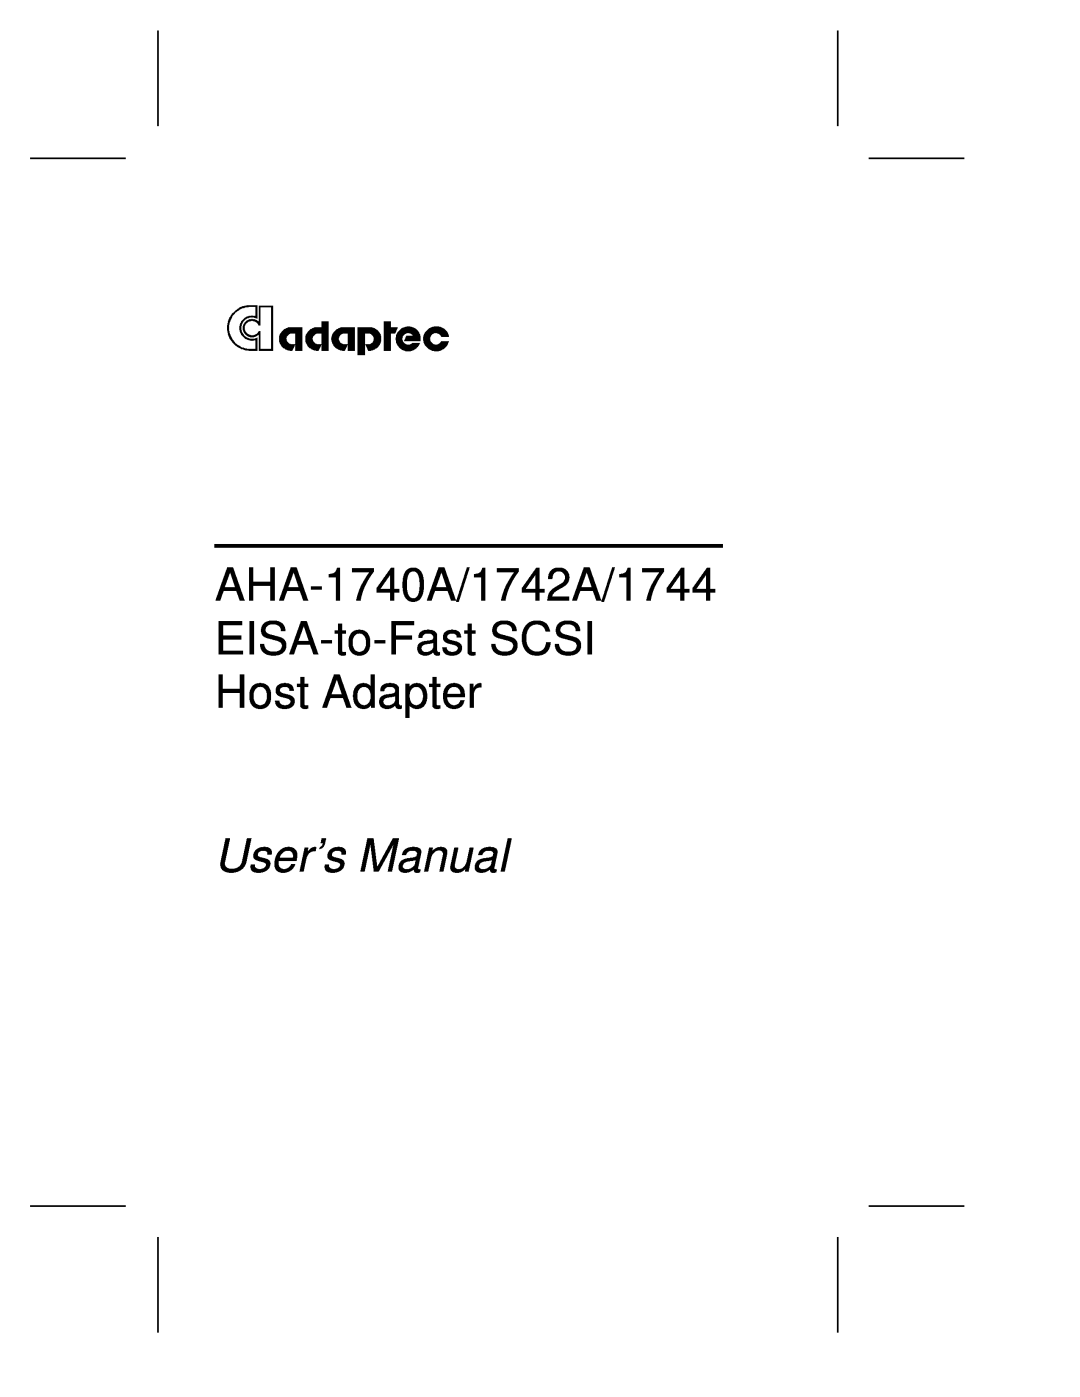 Adaptec user manual AHA-1740A/1742A/1744 EISA-to-Fast SCSI Host Adapter, User’s Manual 